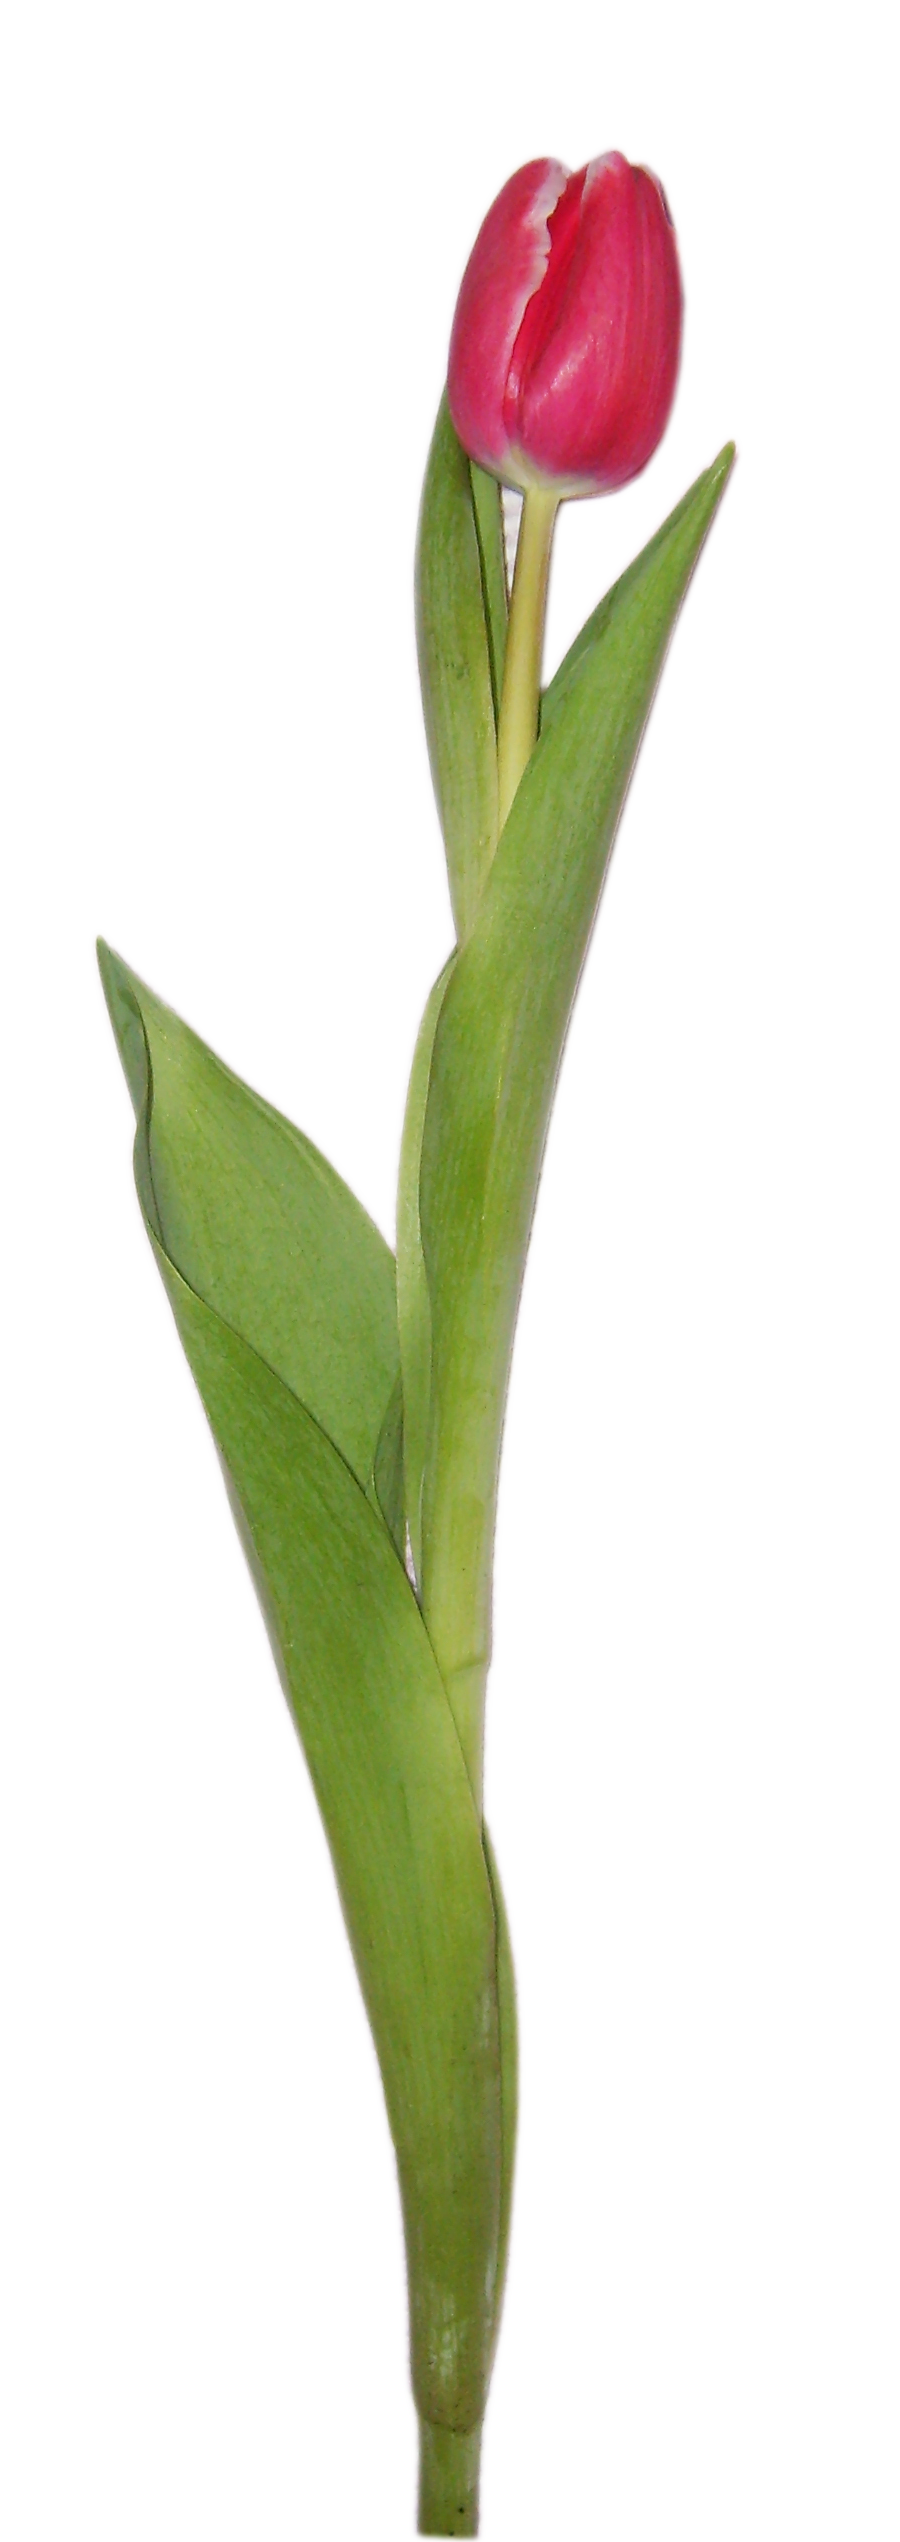 Цветок тюльпан во всю величину